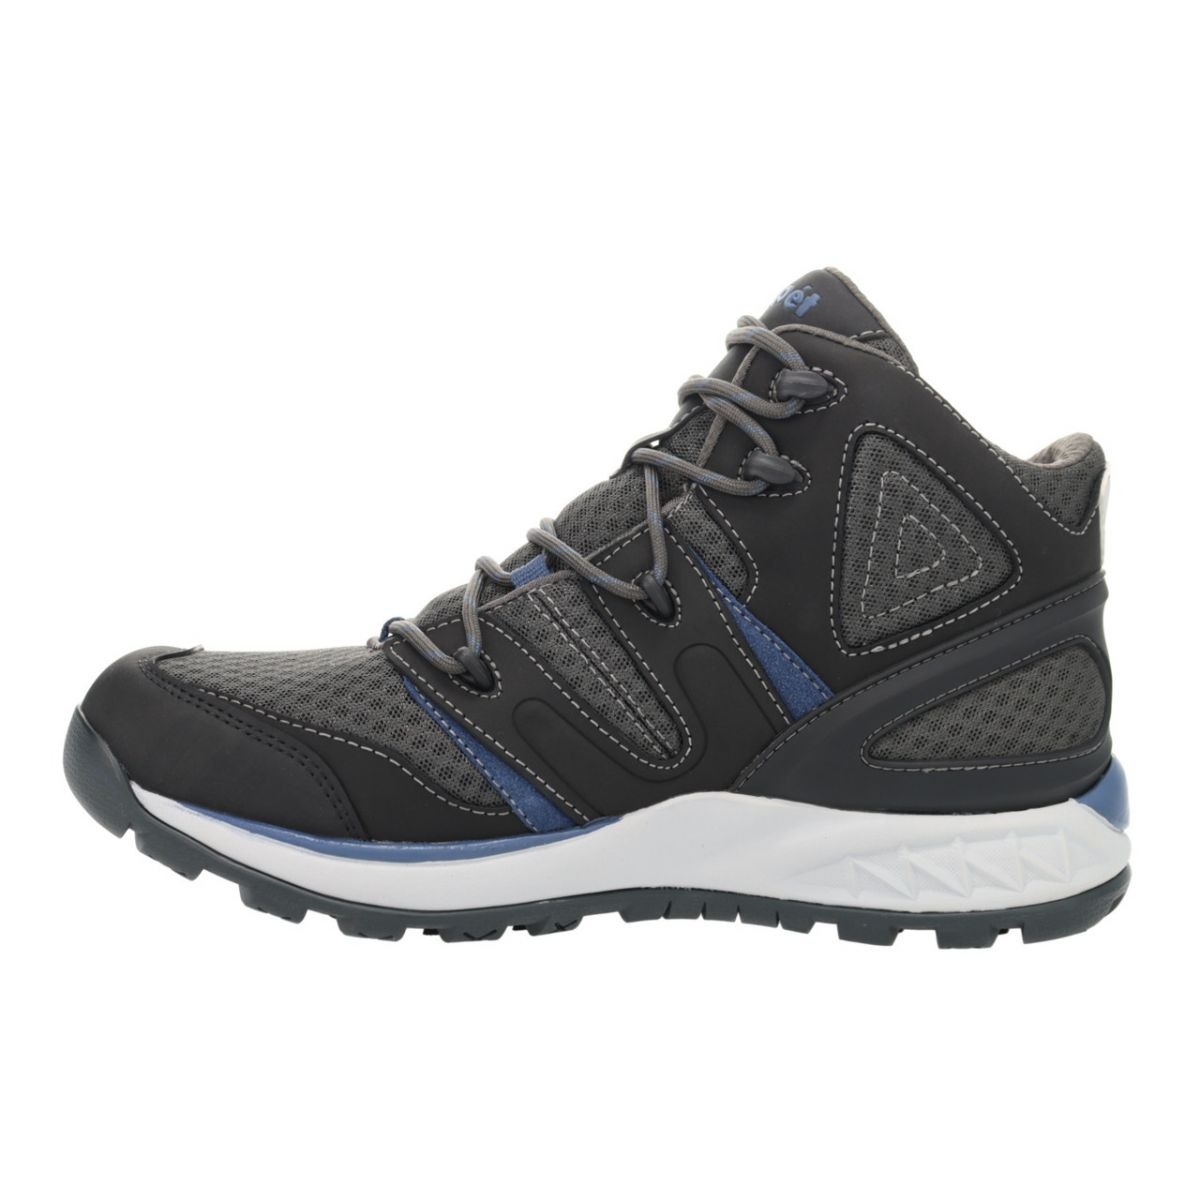 Propet Men's Veymont Waterproof Hiking Boot Grey/Blue - MOA022SGRB GREY/BLUE - GREY/BLUE, 10.5